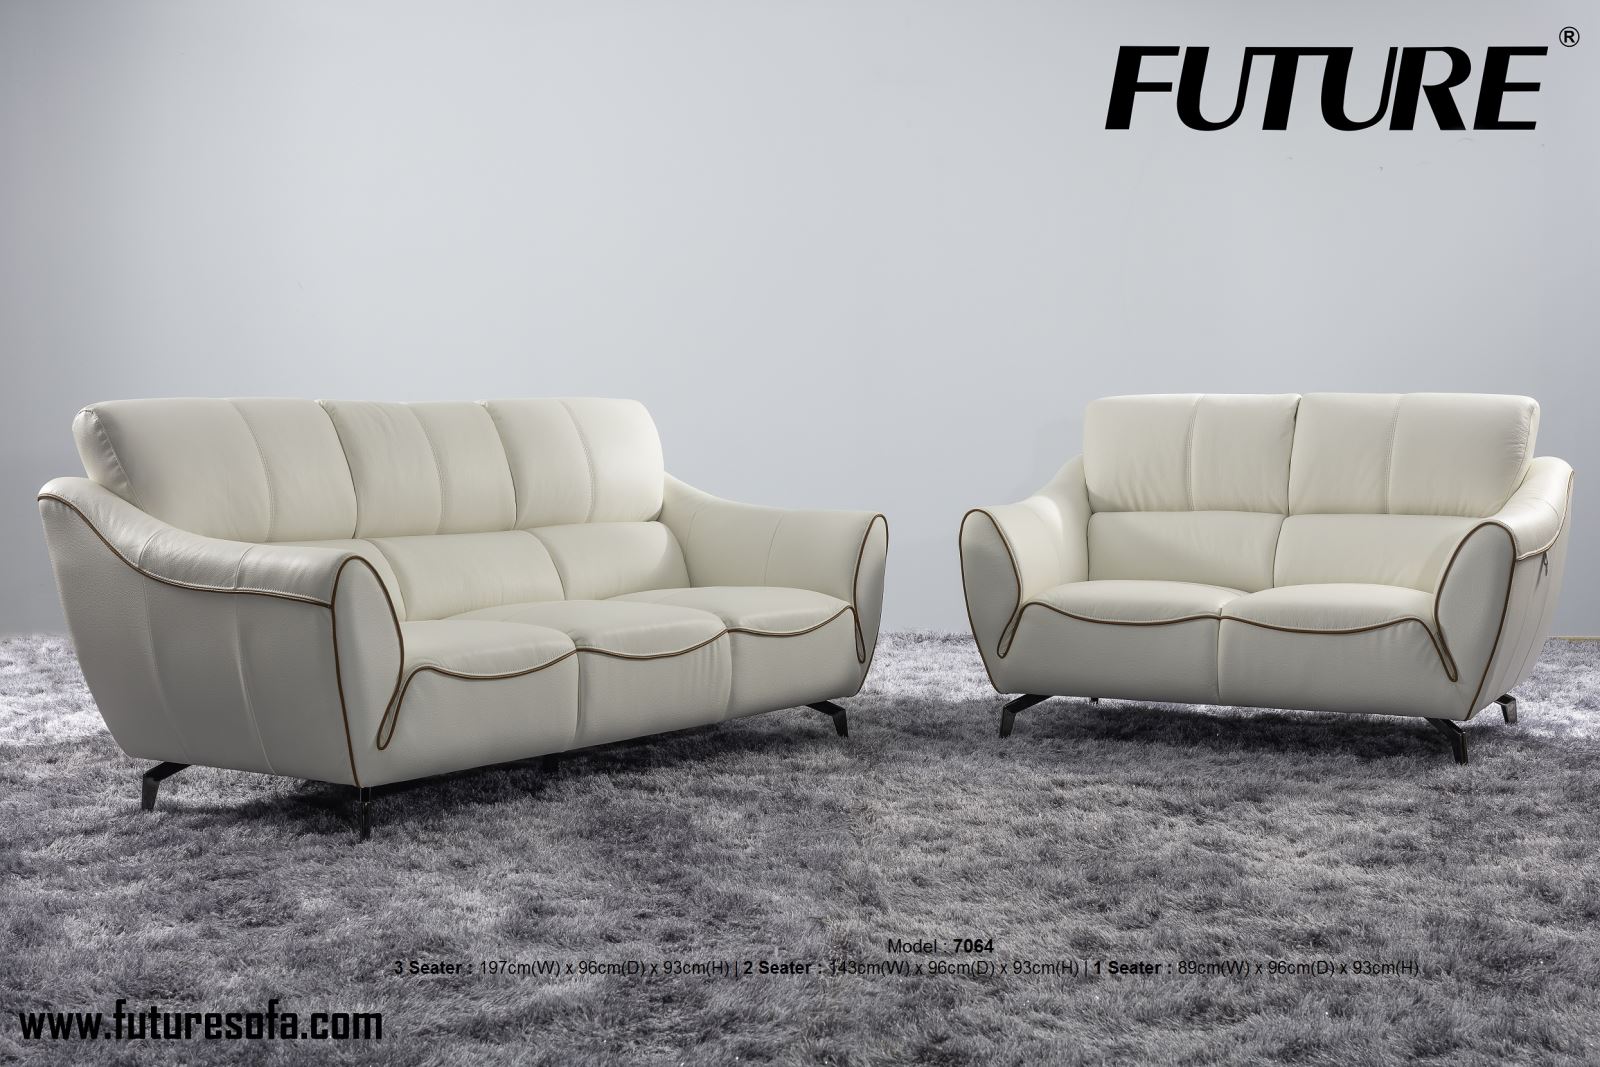 sofa nhập khẩu future